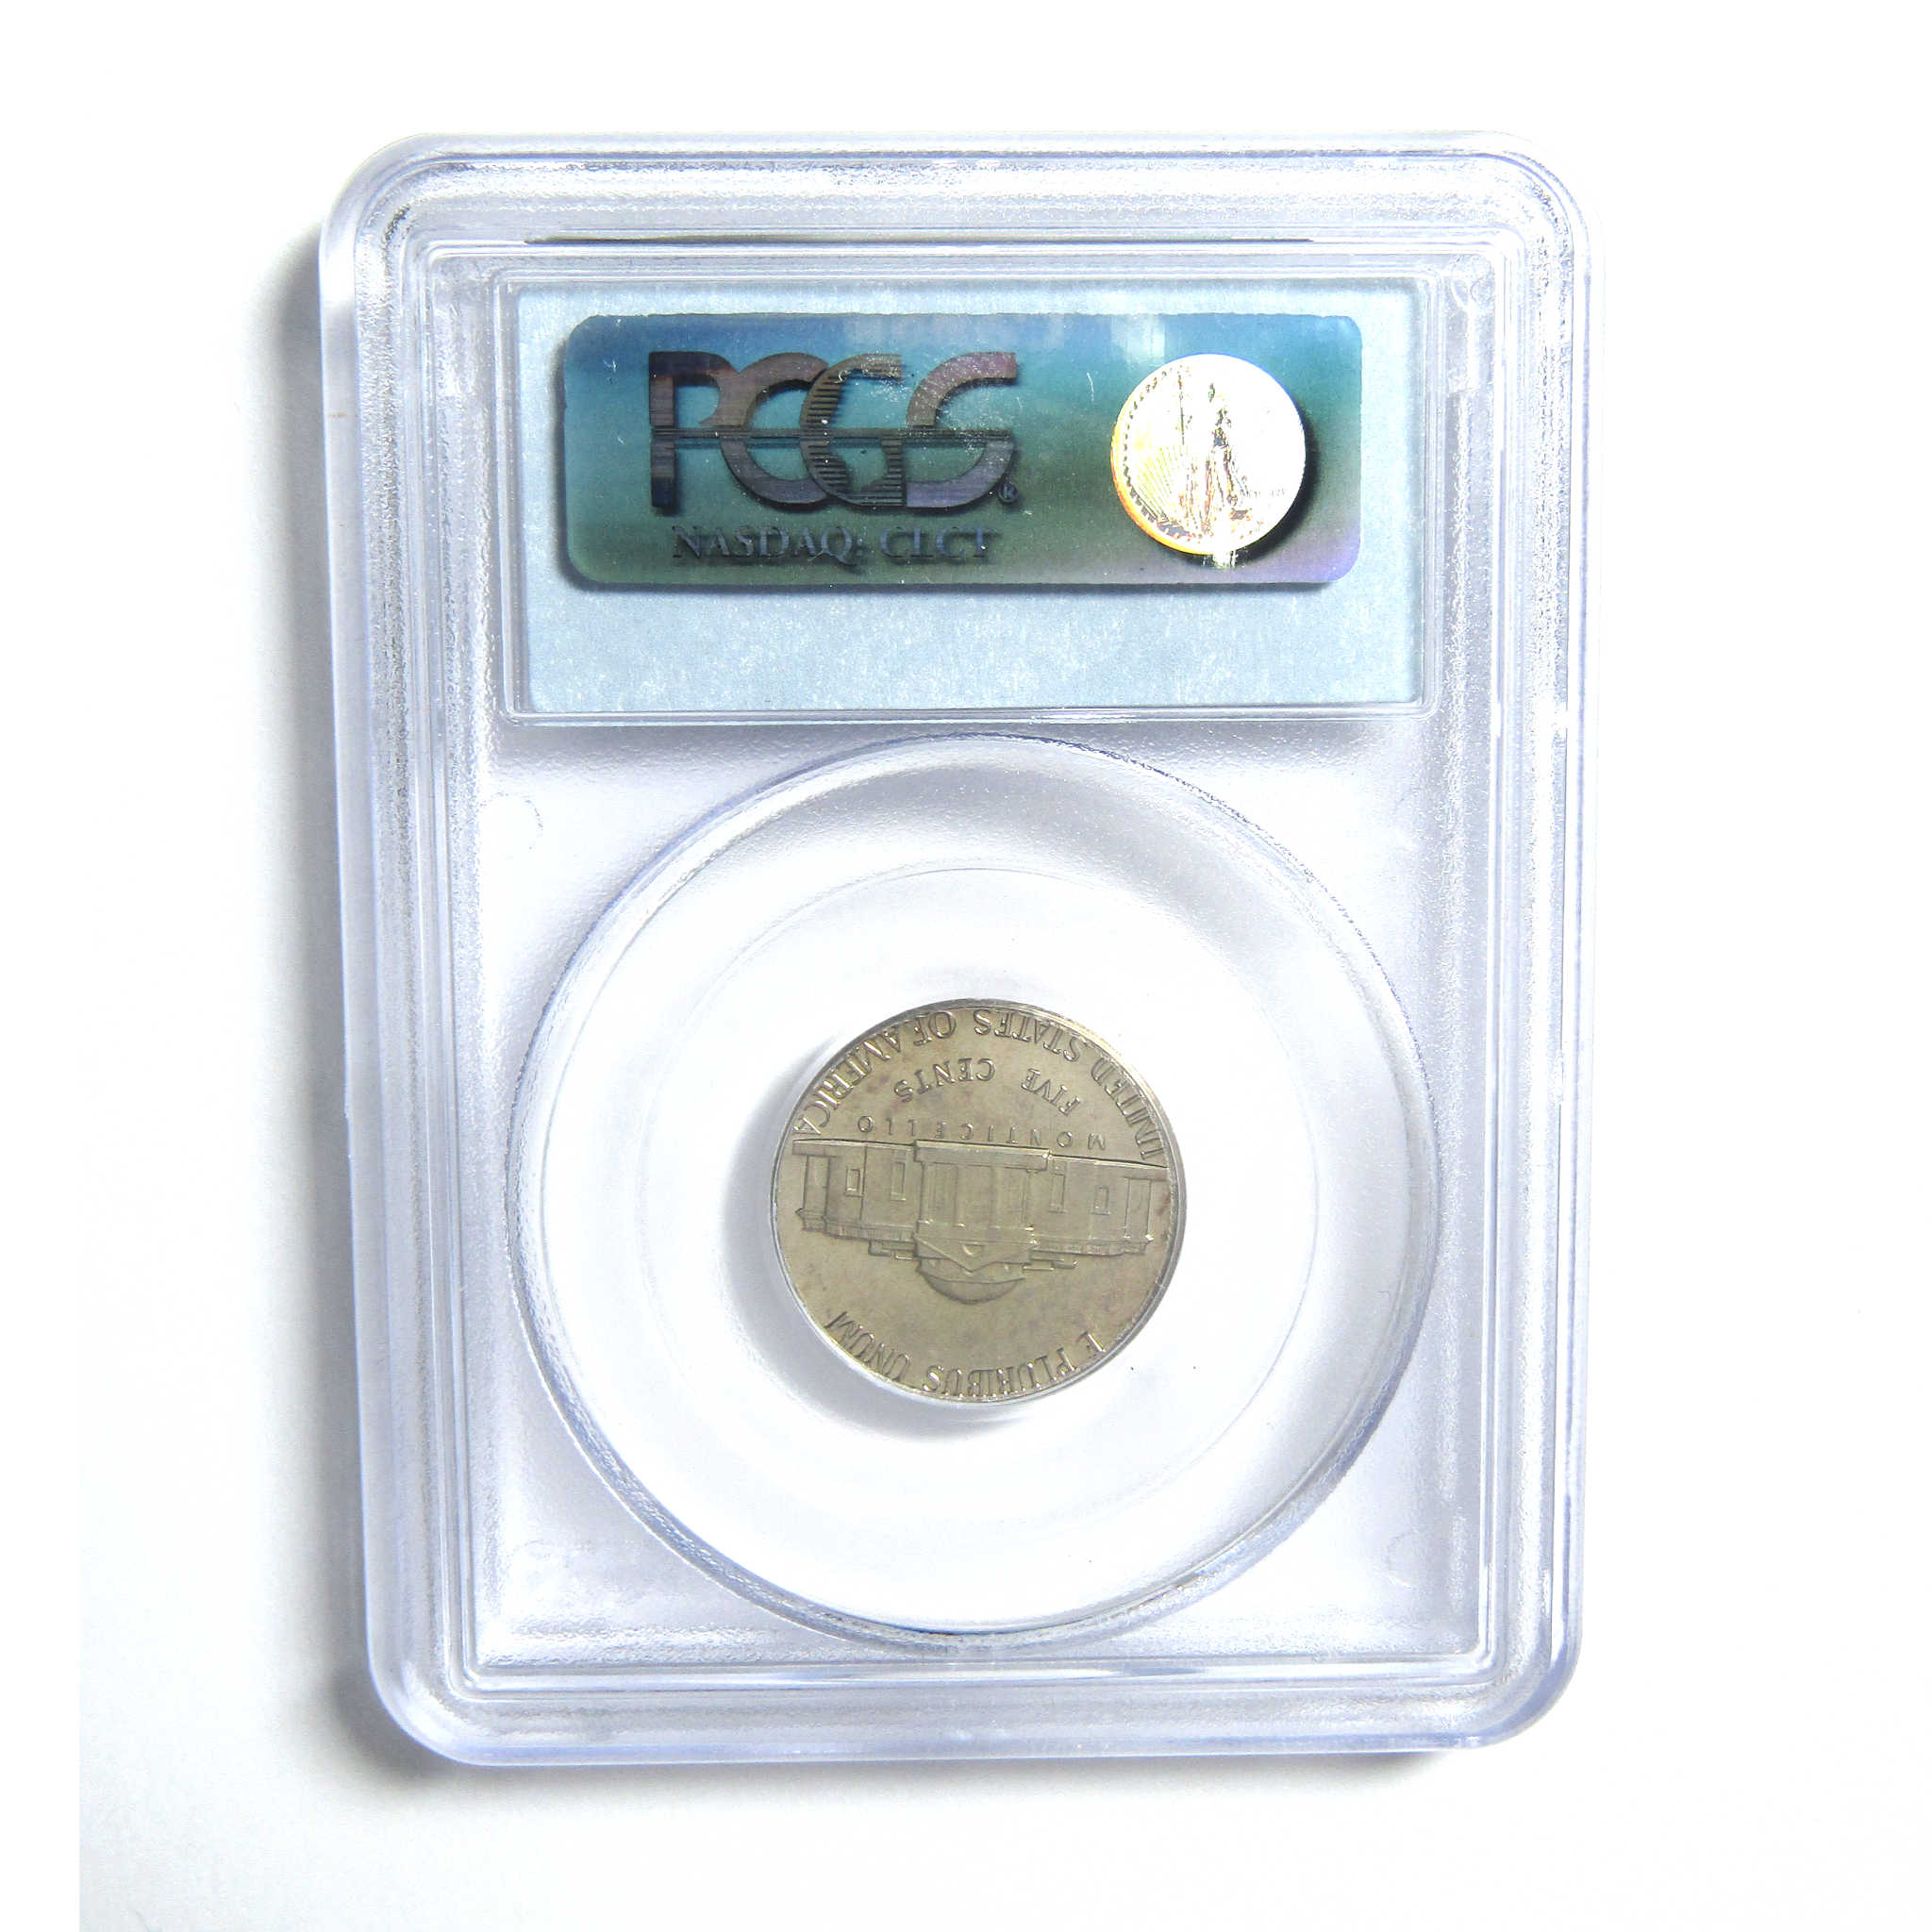 1974 S Jefferson Nickel PR 69 DCAM PCGS 5c Proof Coin SKU:CPC5081